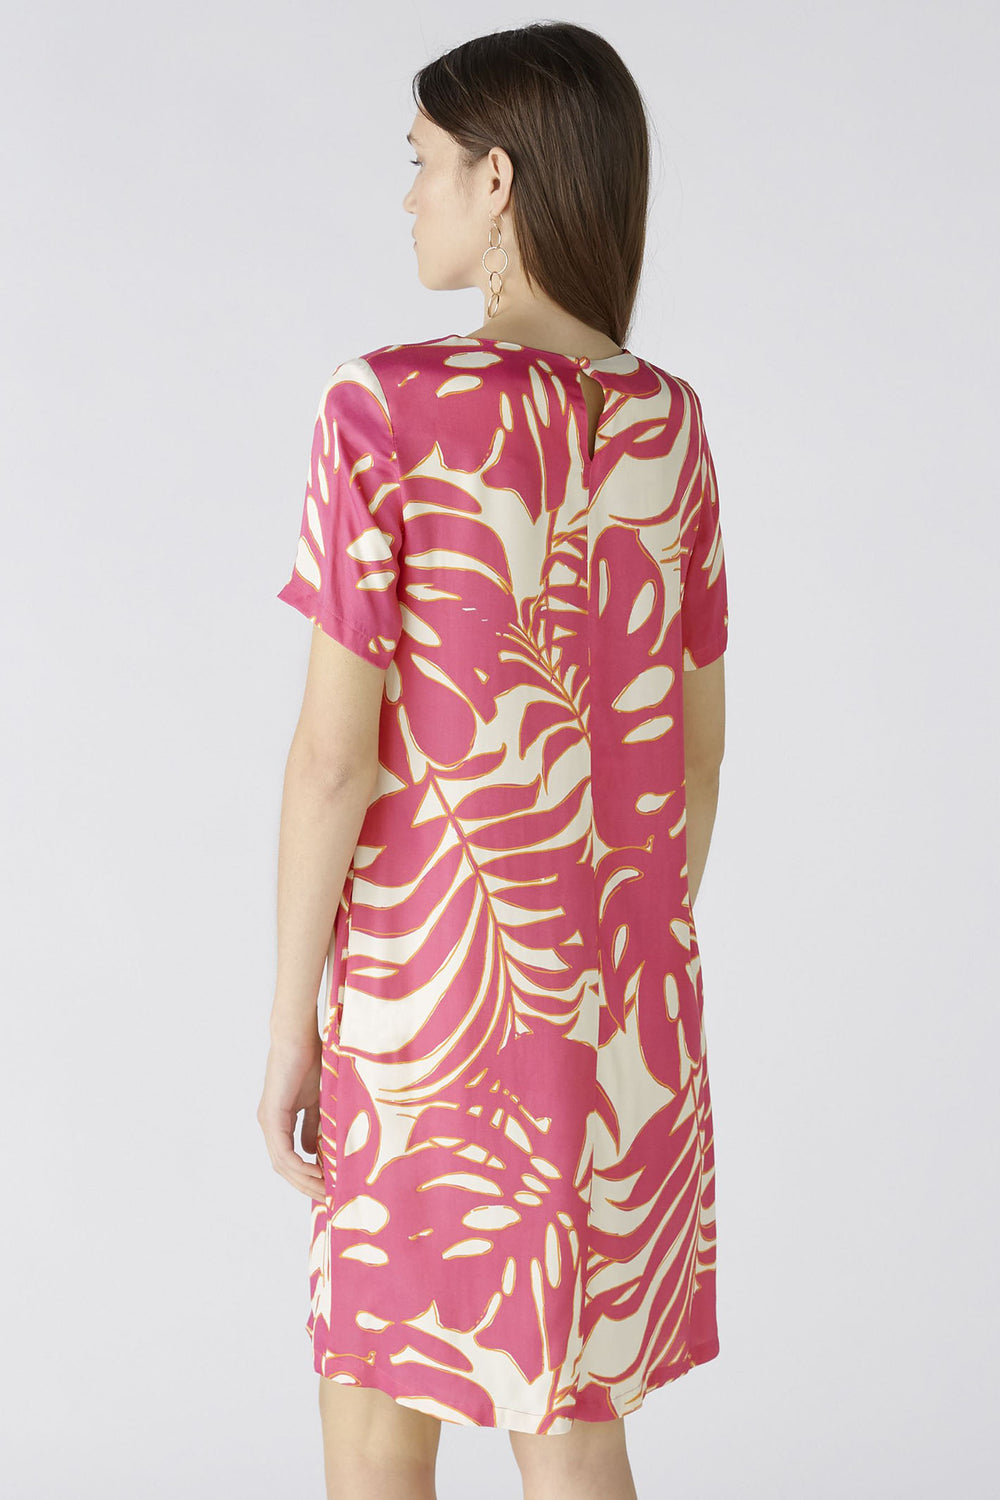 Oui 86713 Pink White Tropical Leaf Print Dress - Dotique